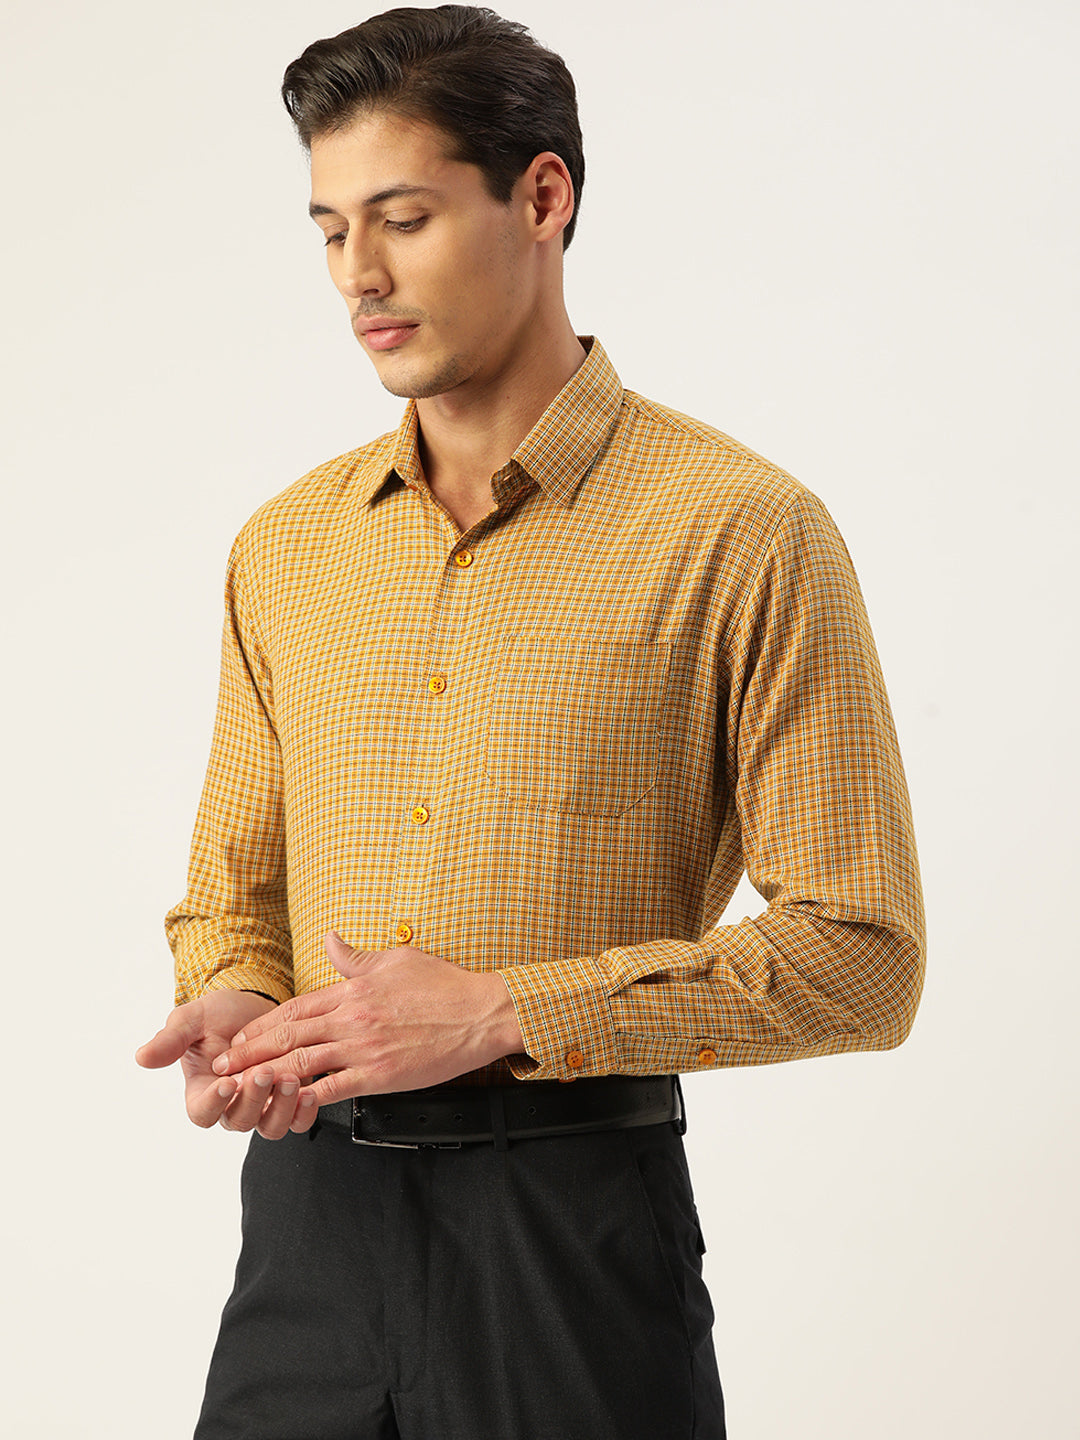 Jainish Men's Cotton Checked Formal Shirts